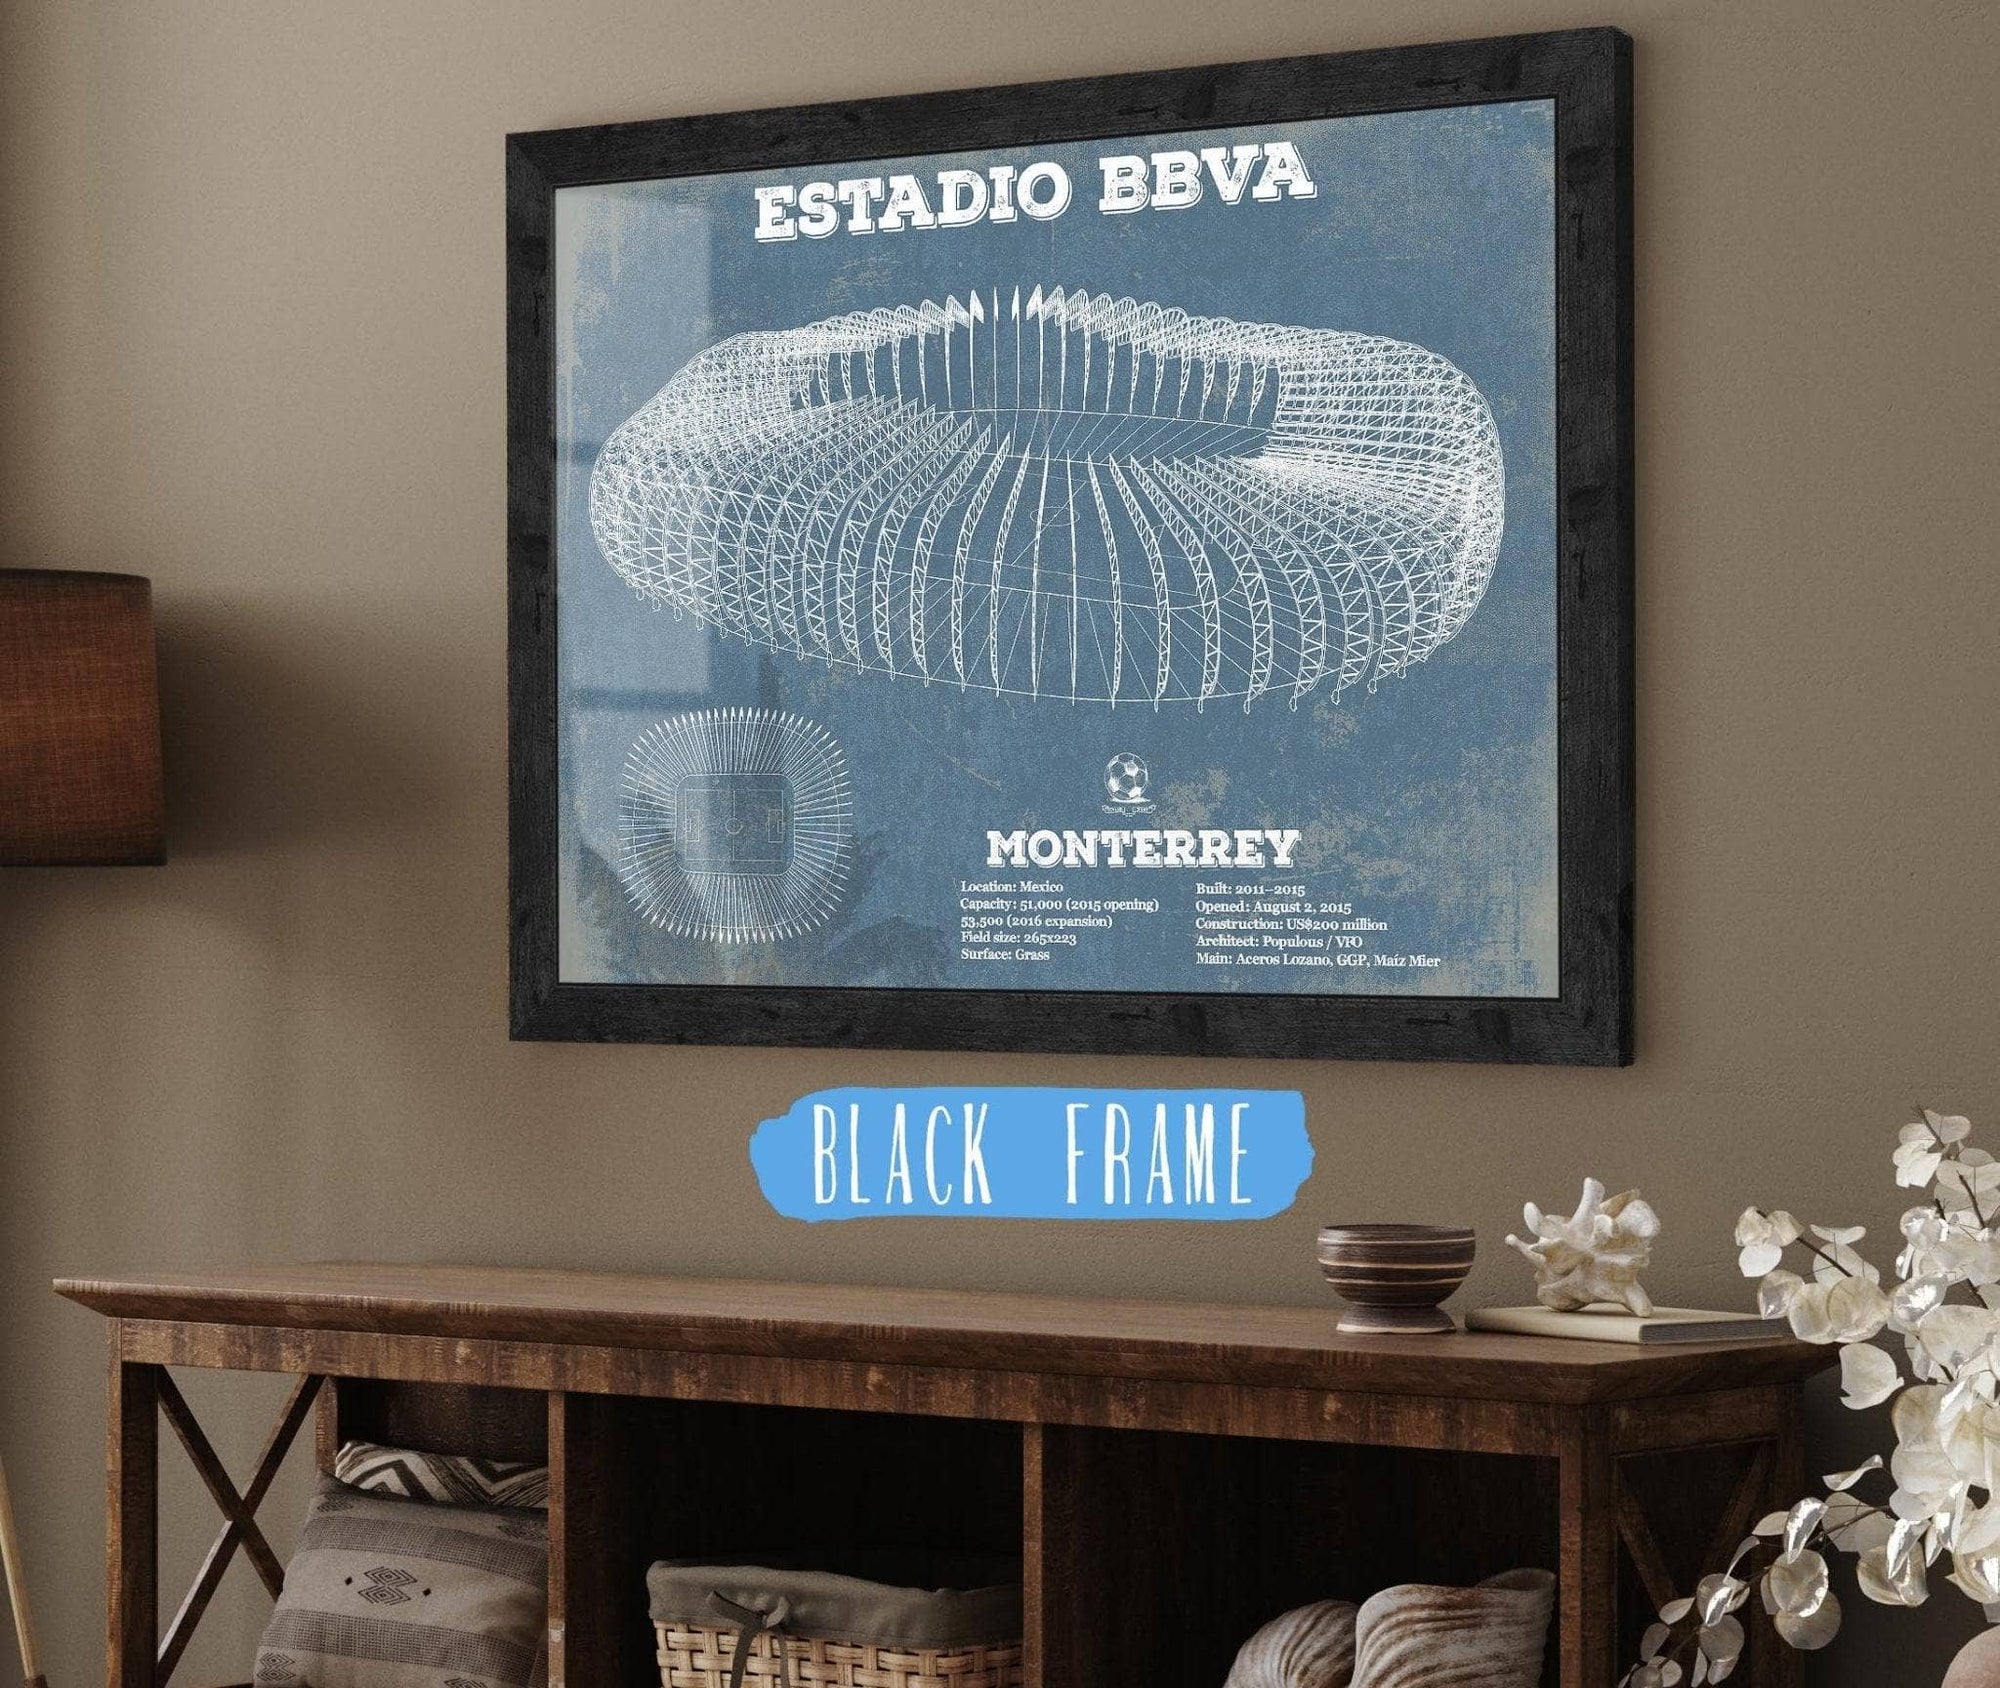 Cutler West Soccer Collection 14" x 11" / Black Frame Monterrey Vintage Estadio BBVA Soccer Print 833110141_57582